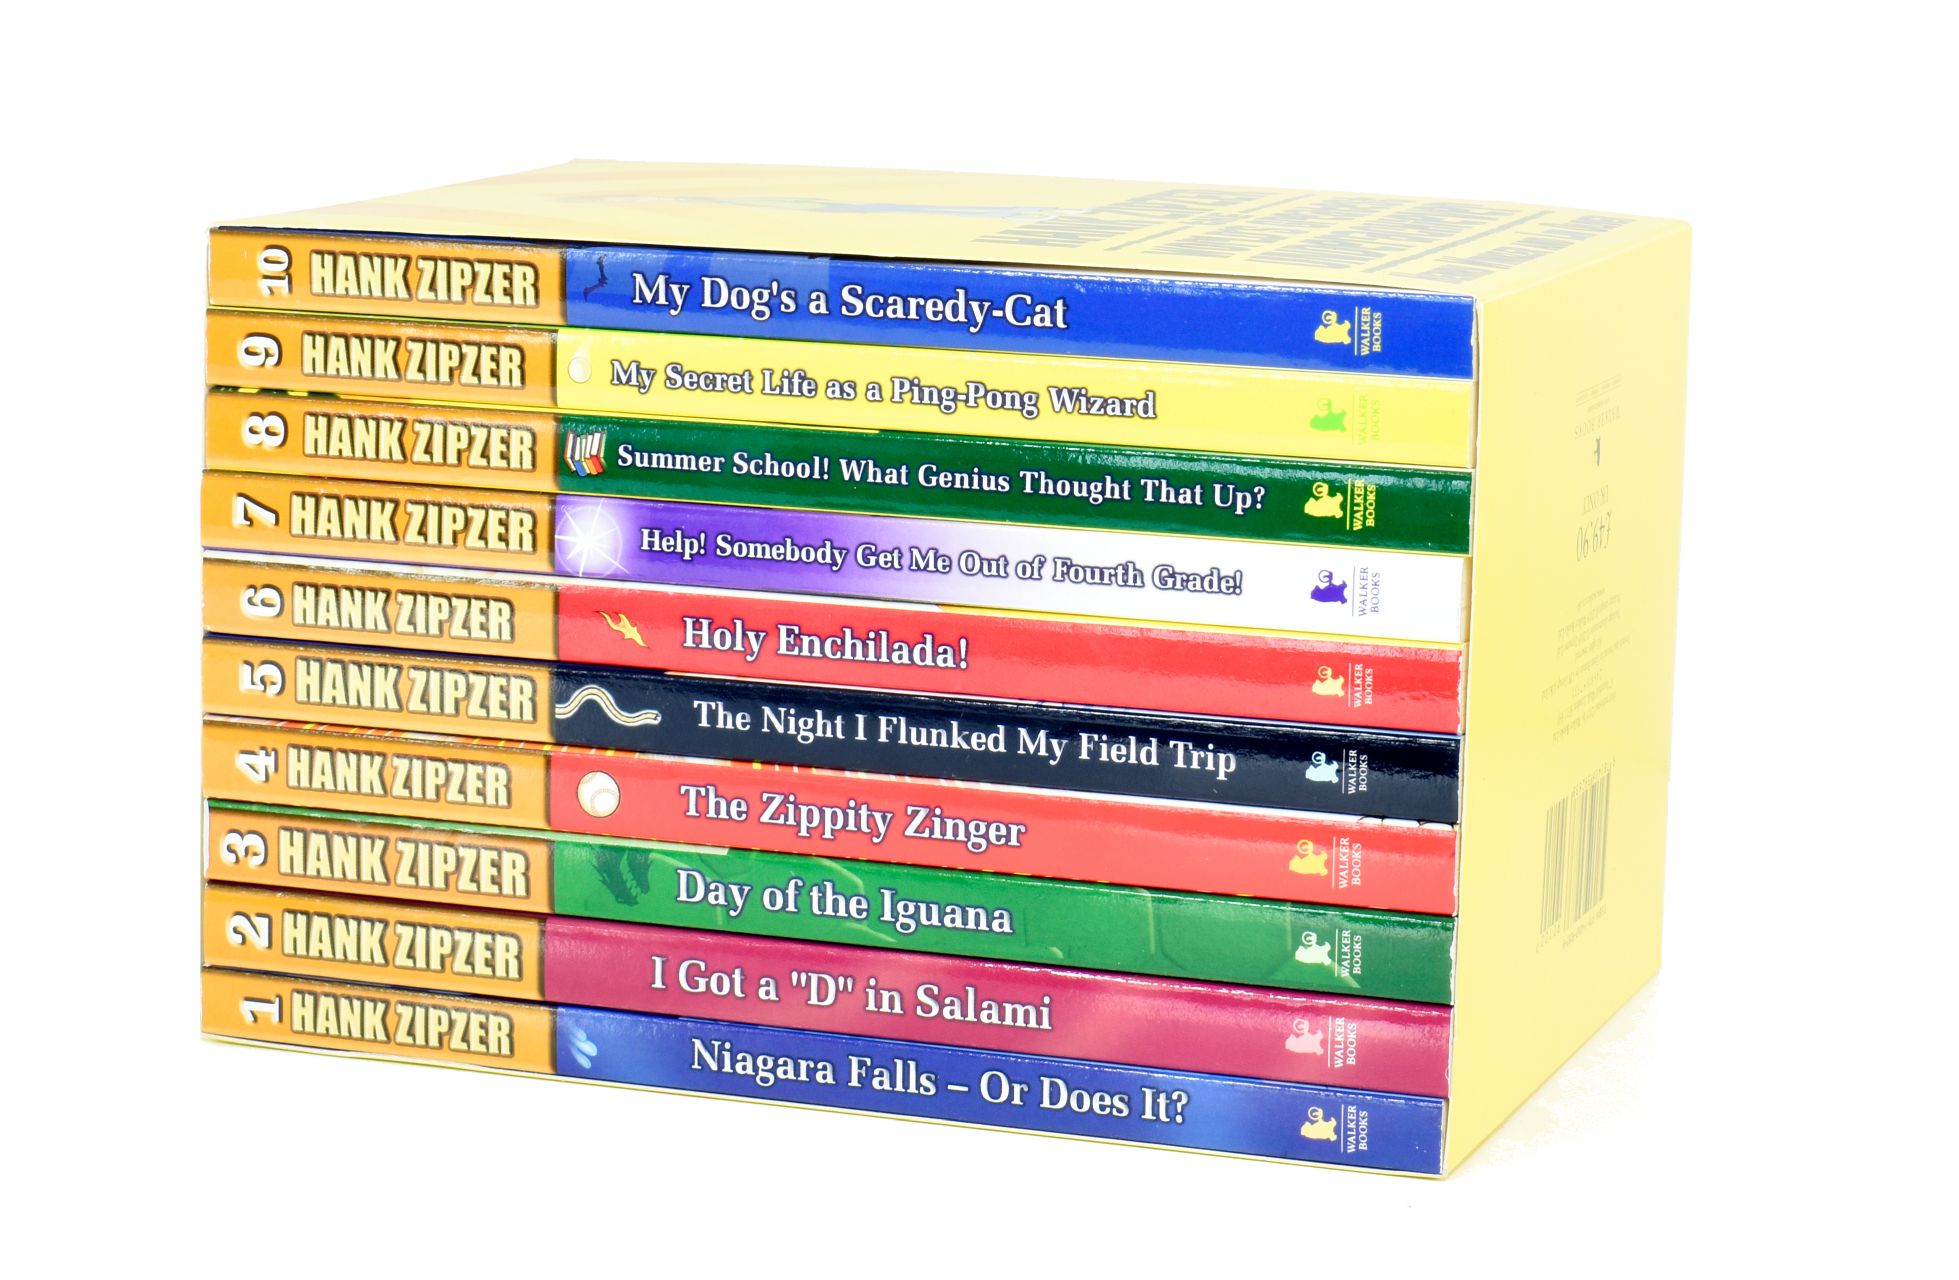 Hank Zipzer 10 Books Children Collection Paperback Box Set By Henry Winkler & Lin Oliver - St Stephens Books